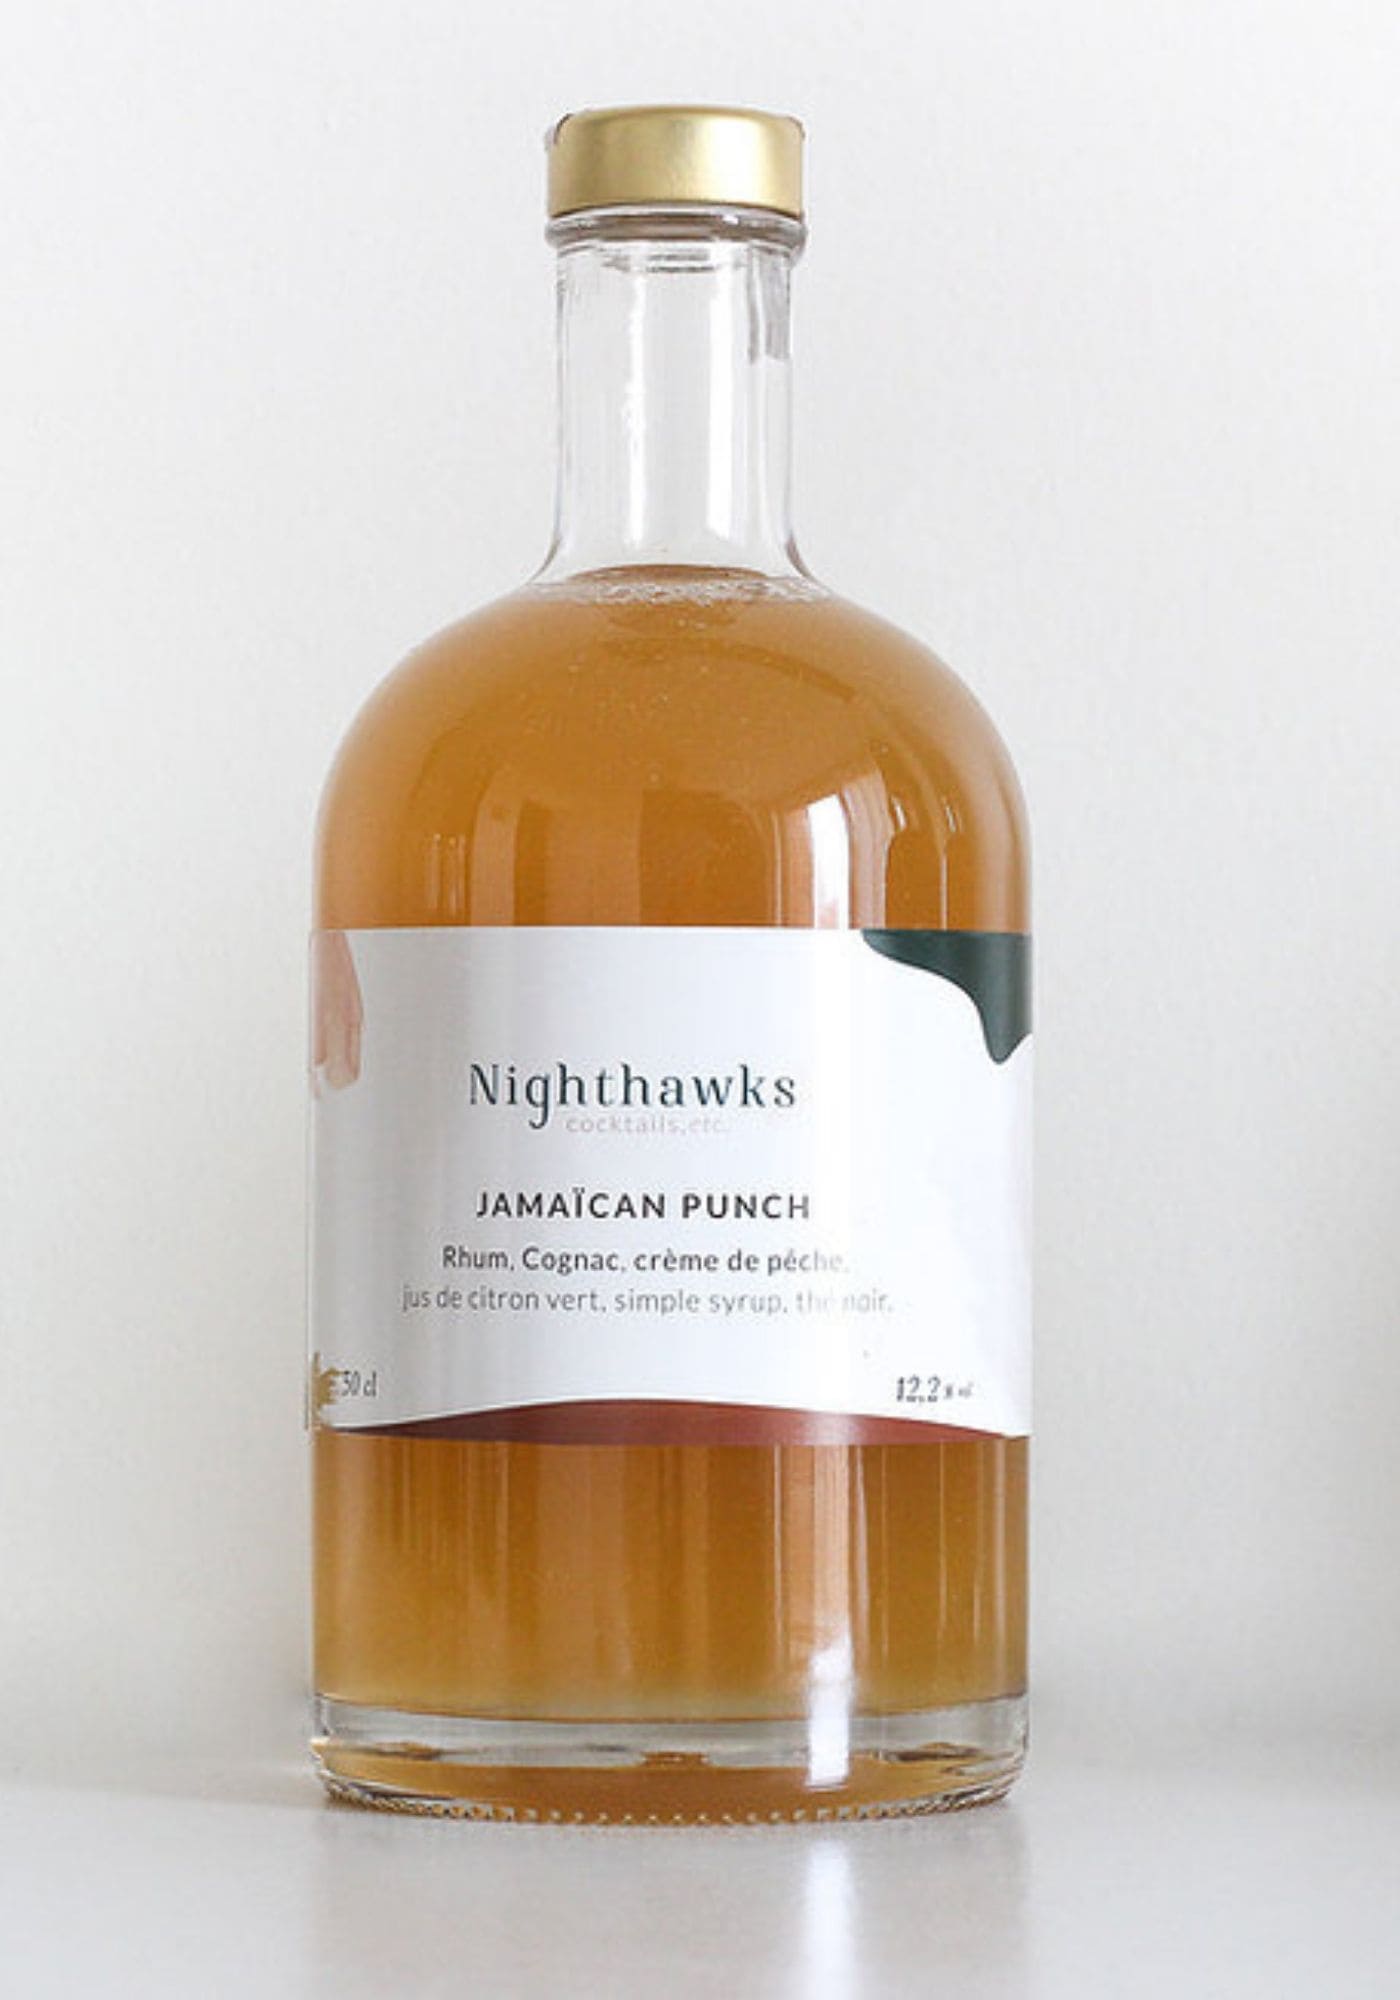 cocktail-jamaican-punch-nighthawks-rhum-cognac-alcool-naturel